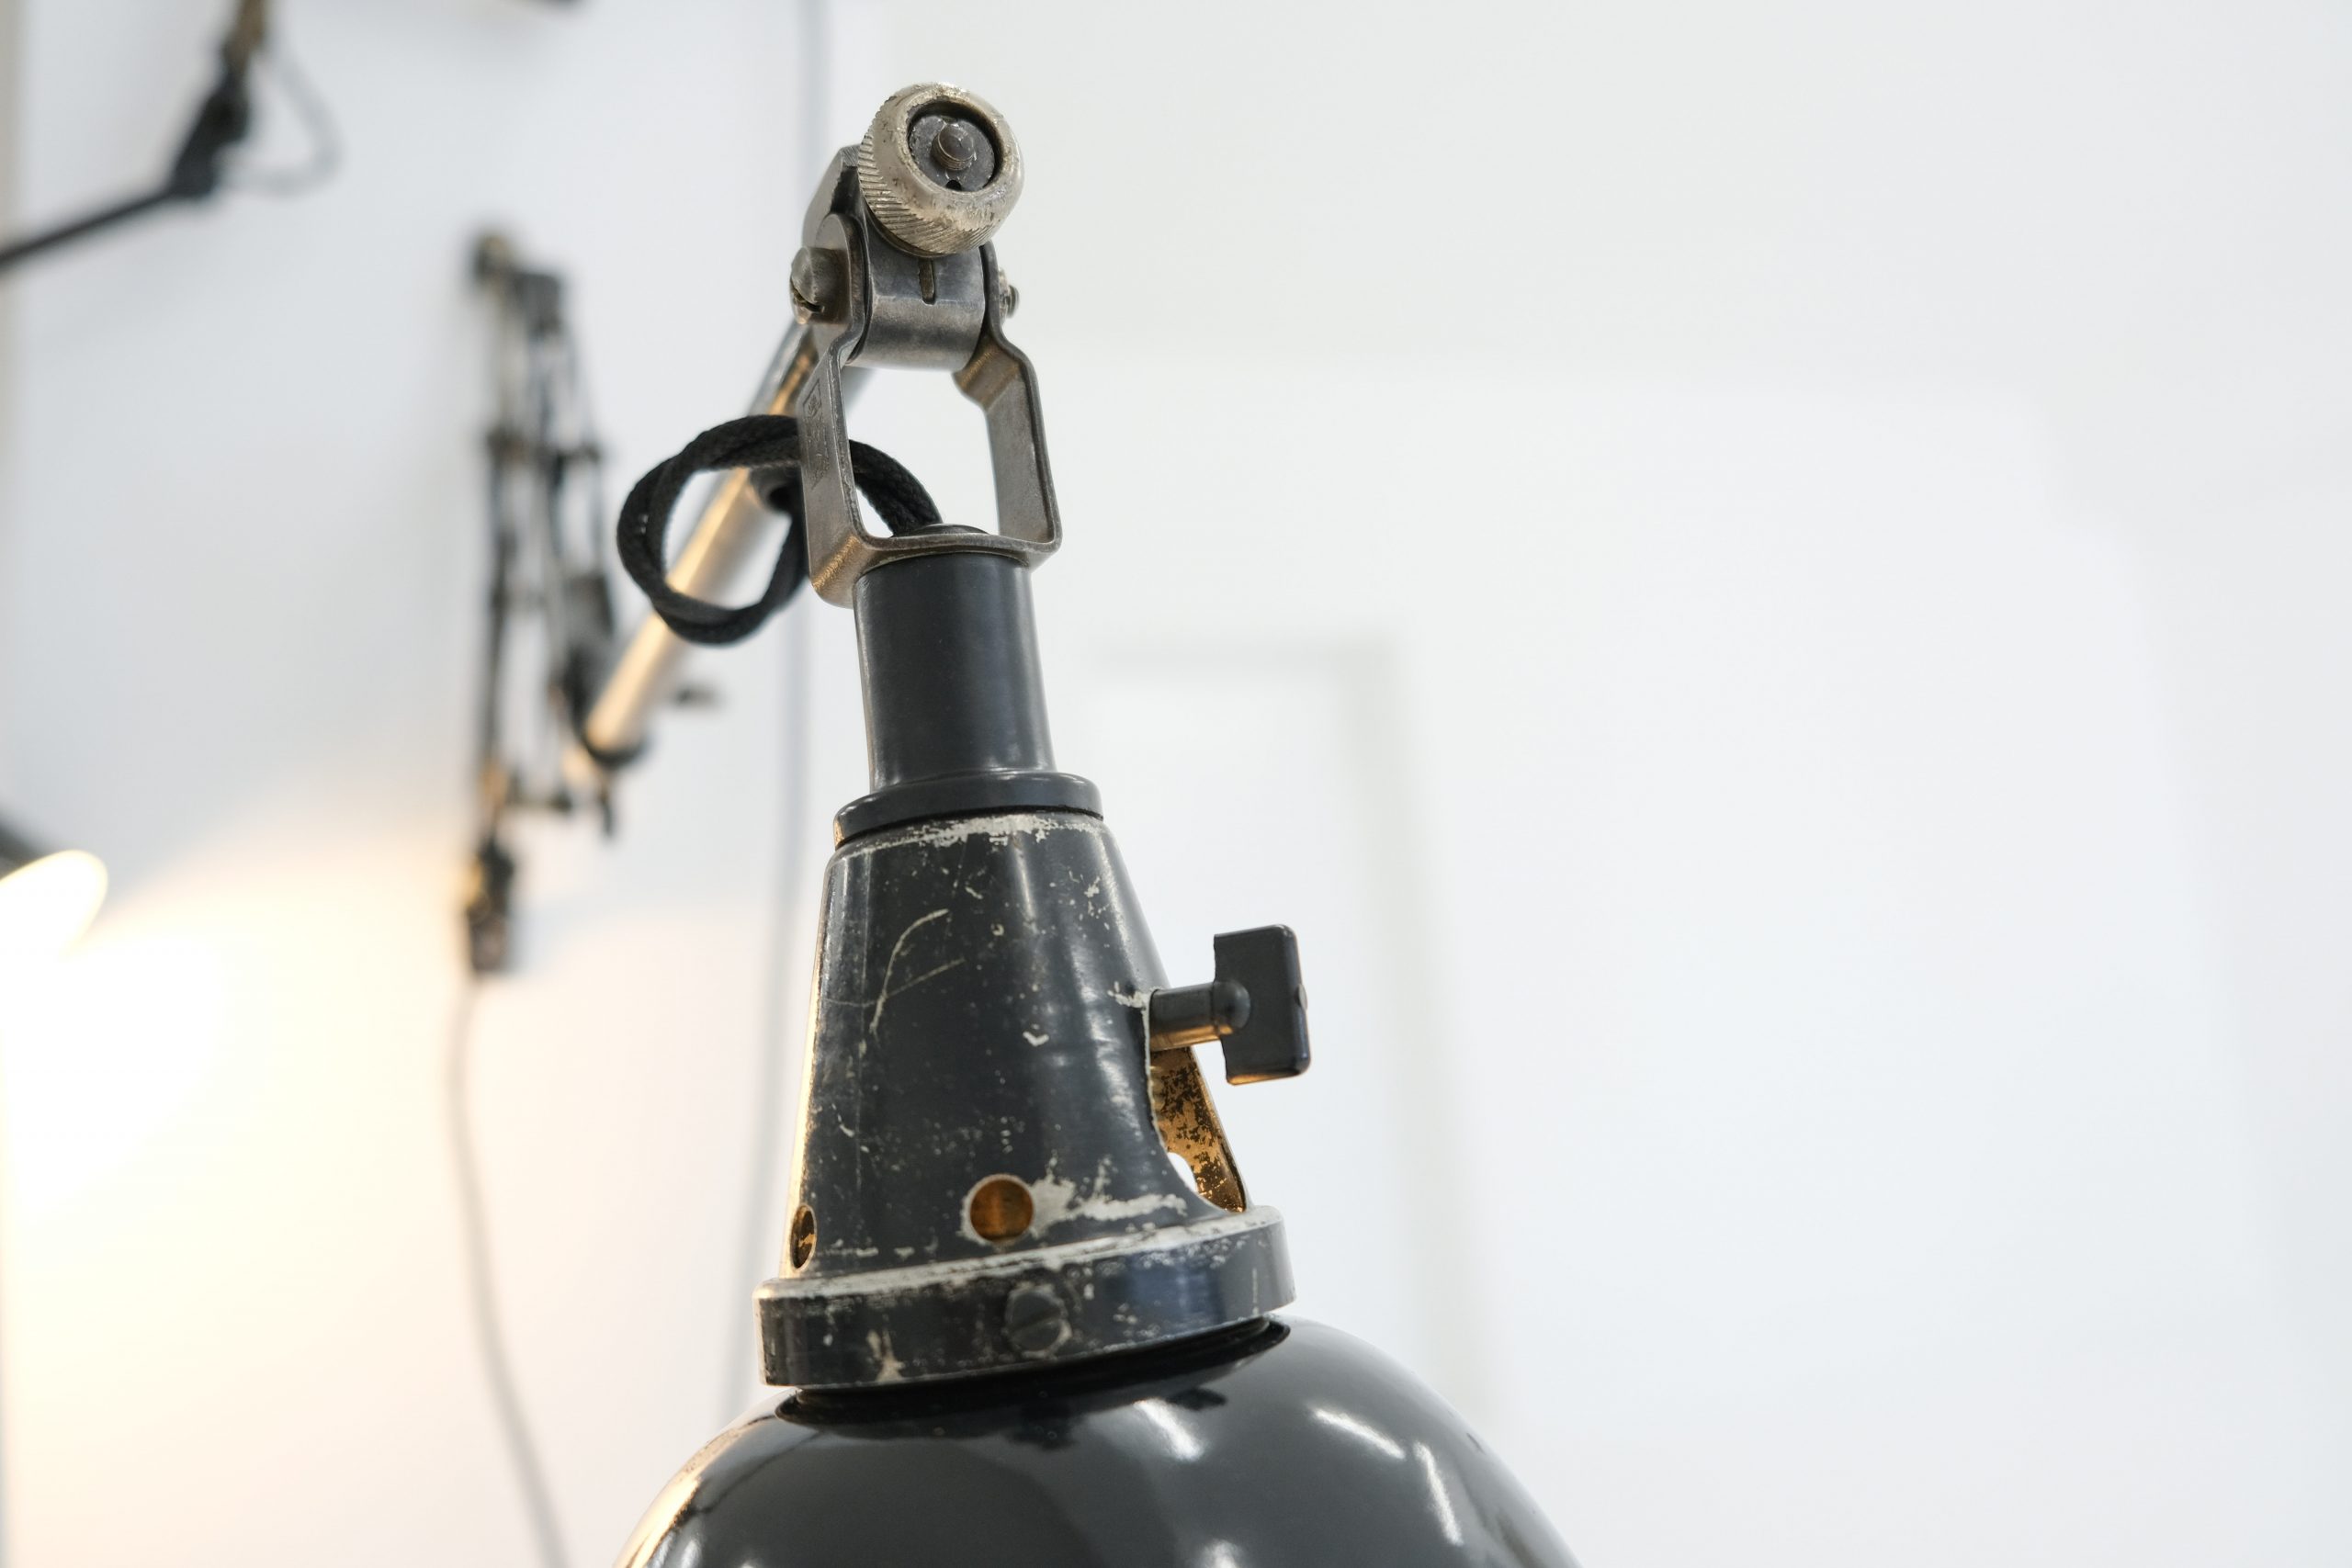 scissor lamp curt fischer Midgard lamp Industriewerke Auma bauhaus Dessau